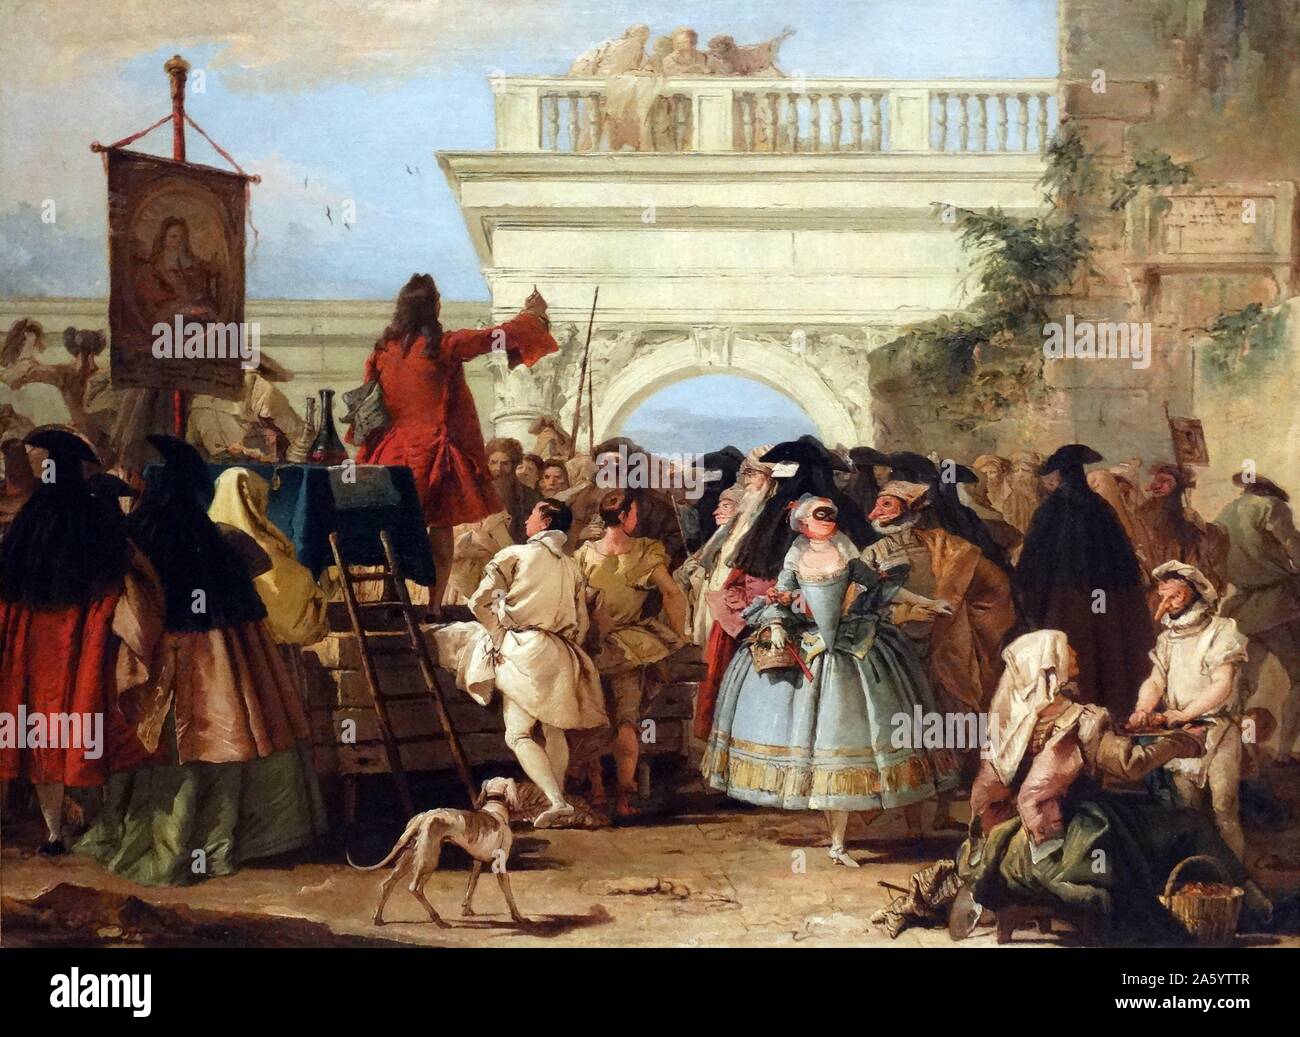 Le charlatan, 1756. huile sur toile, de Giandomenico Tiepolo (Bassano Jacopo) Banque D'Images